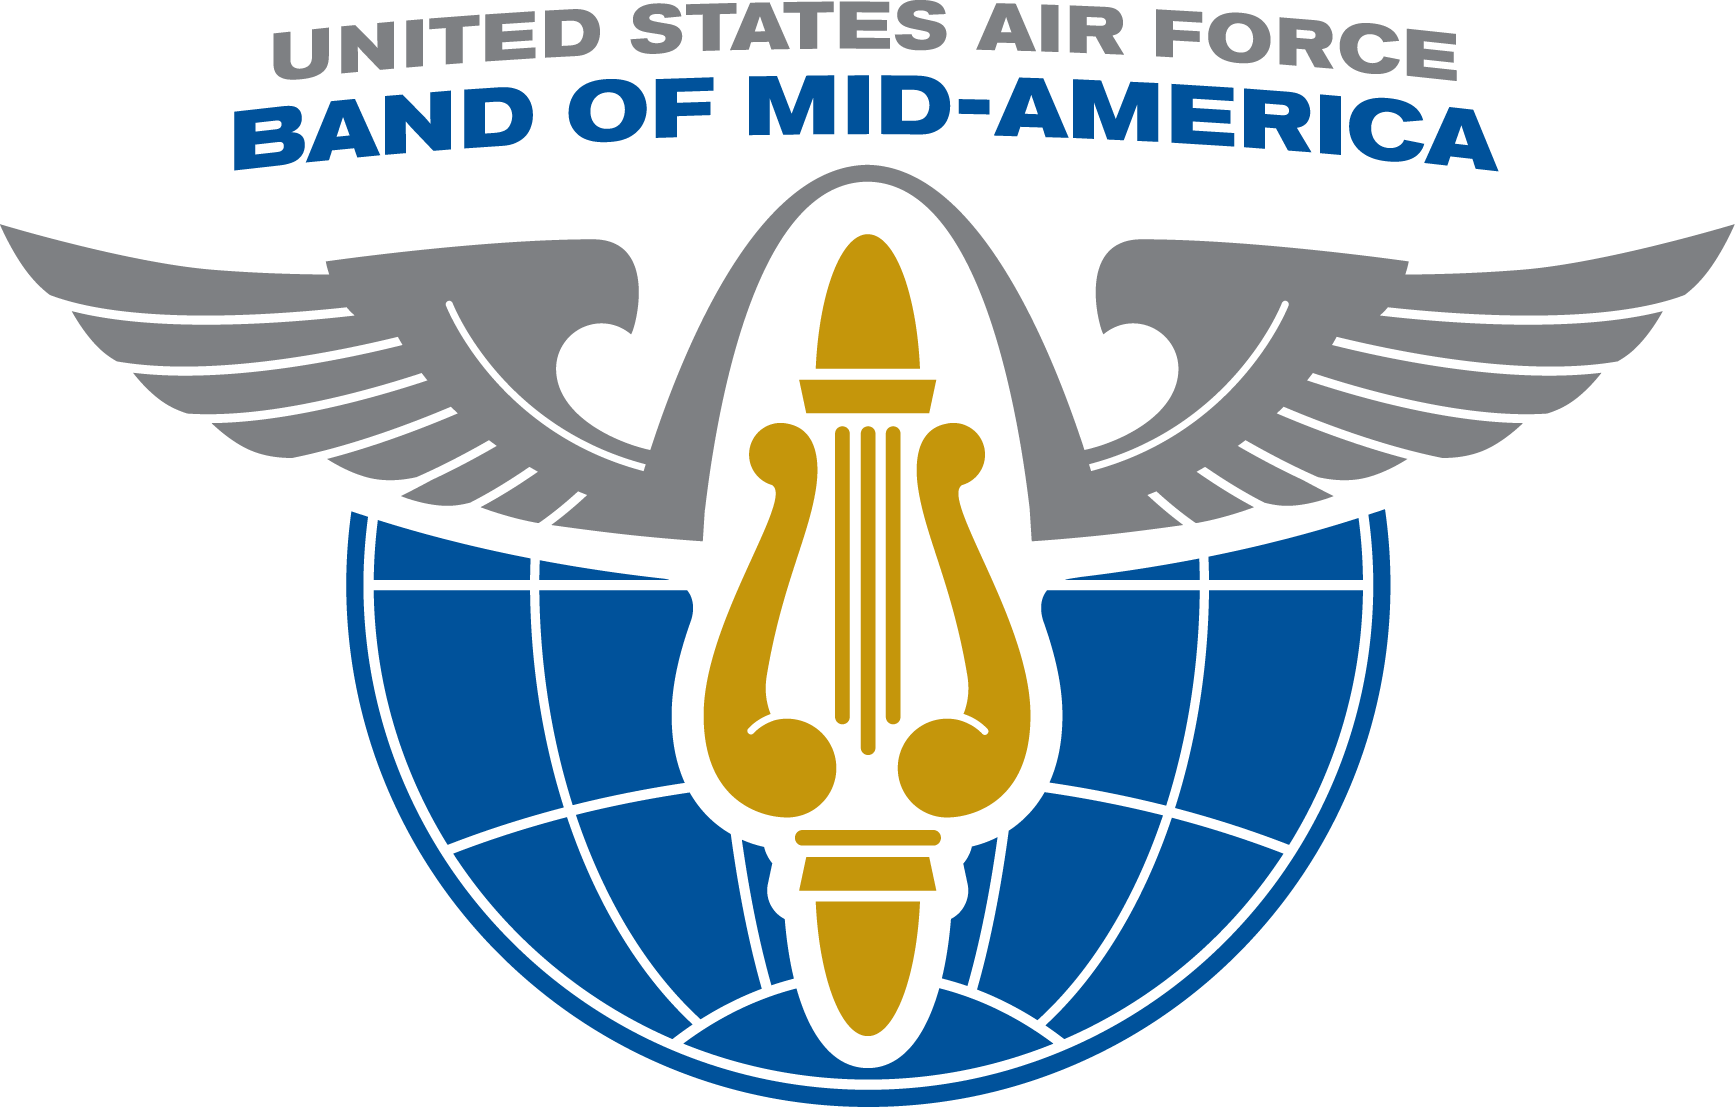 U.S Air Force Band of Mid-America logo